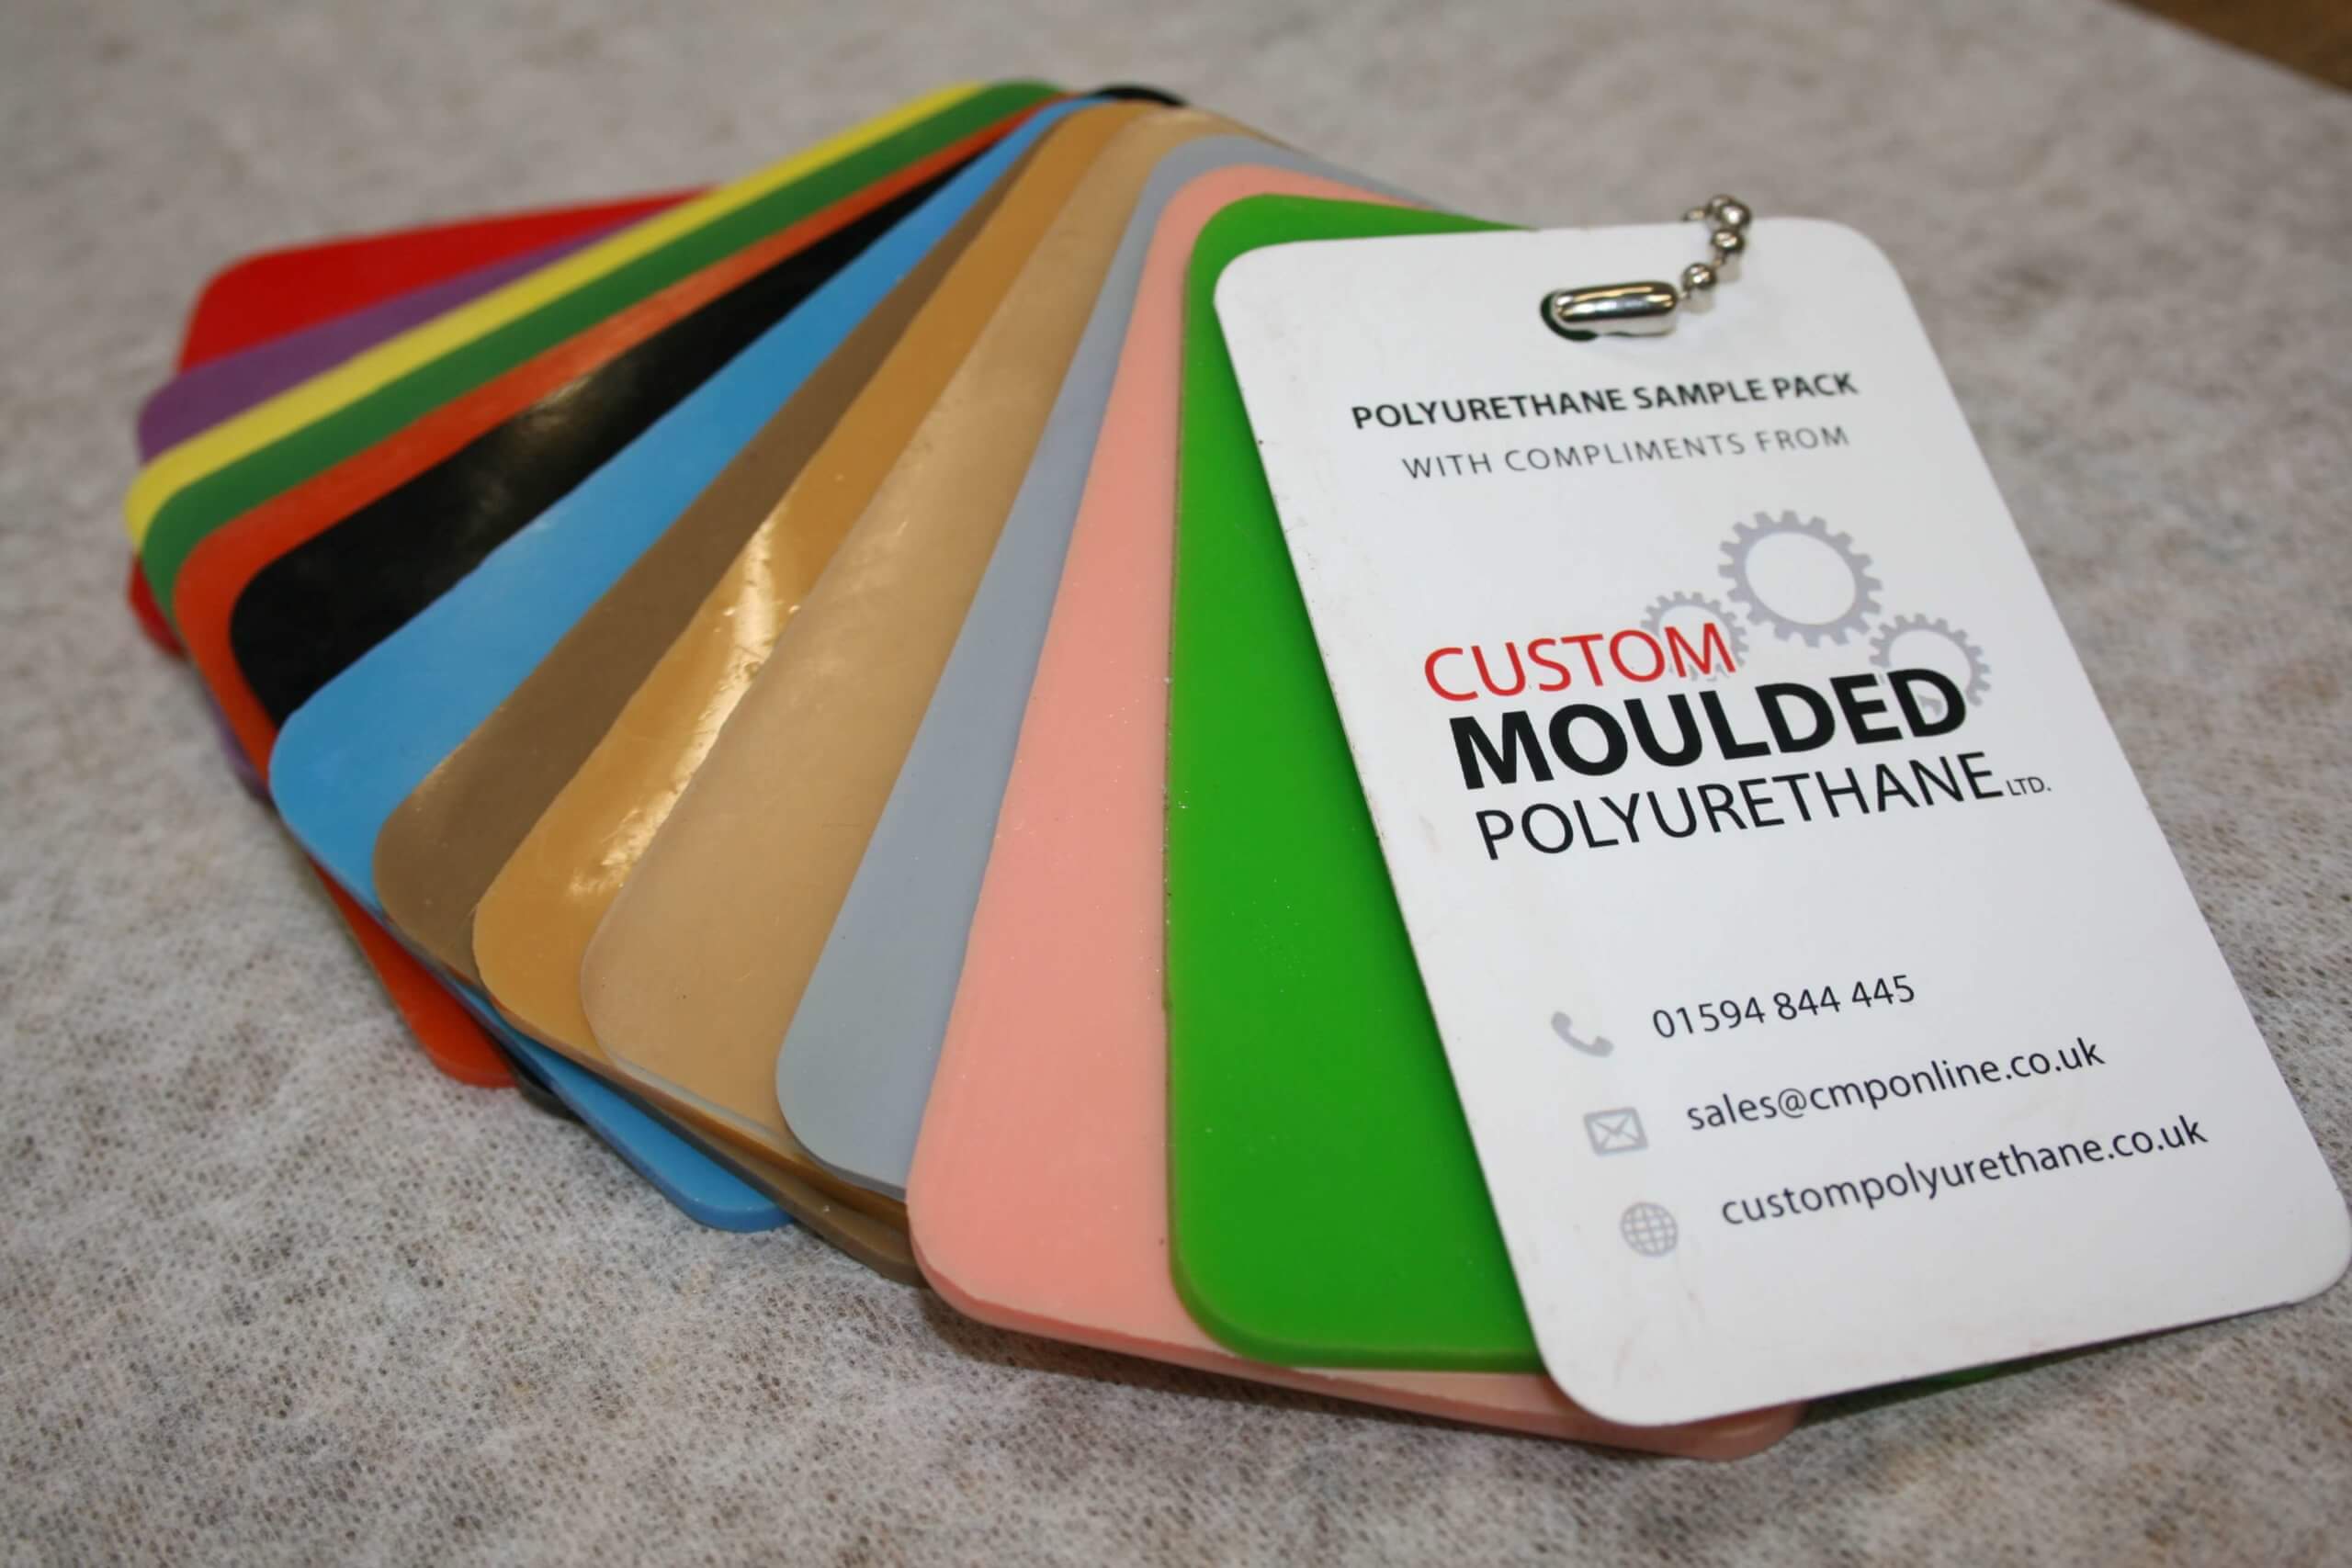 Custom Moulded Polyurethane LTD branding